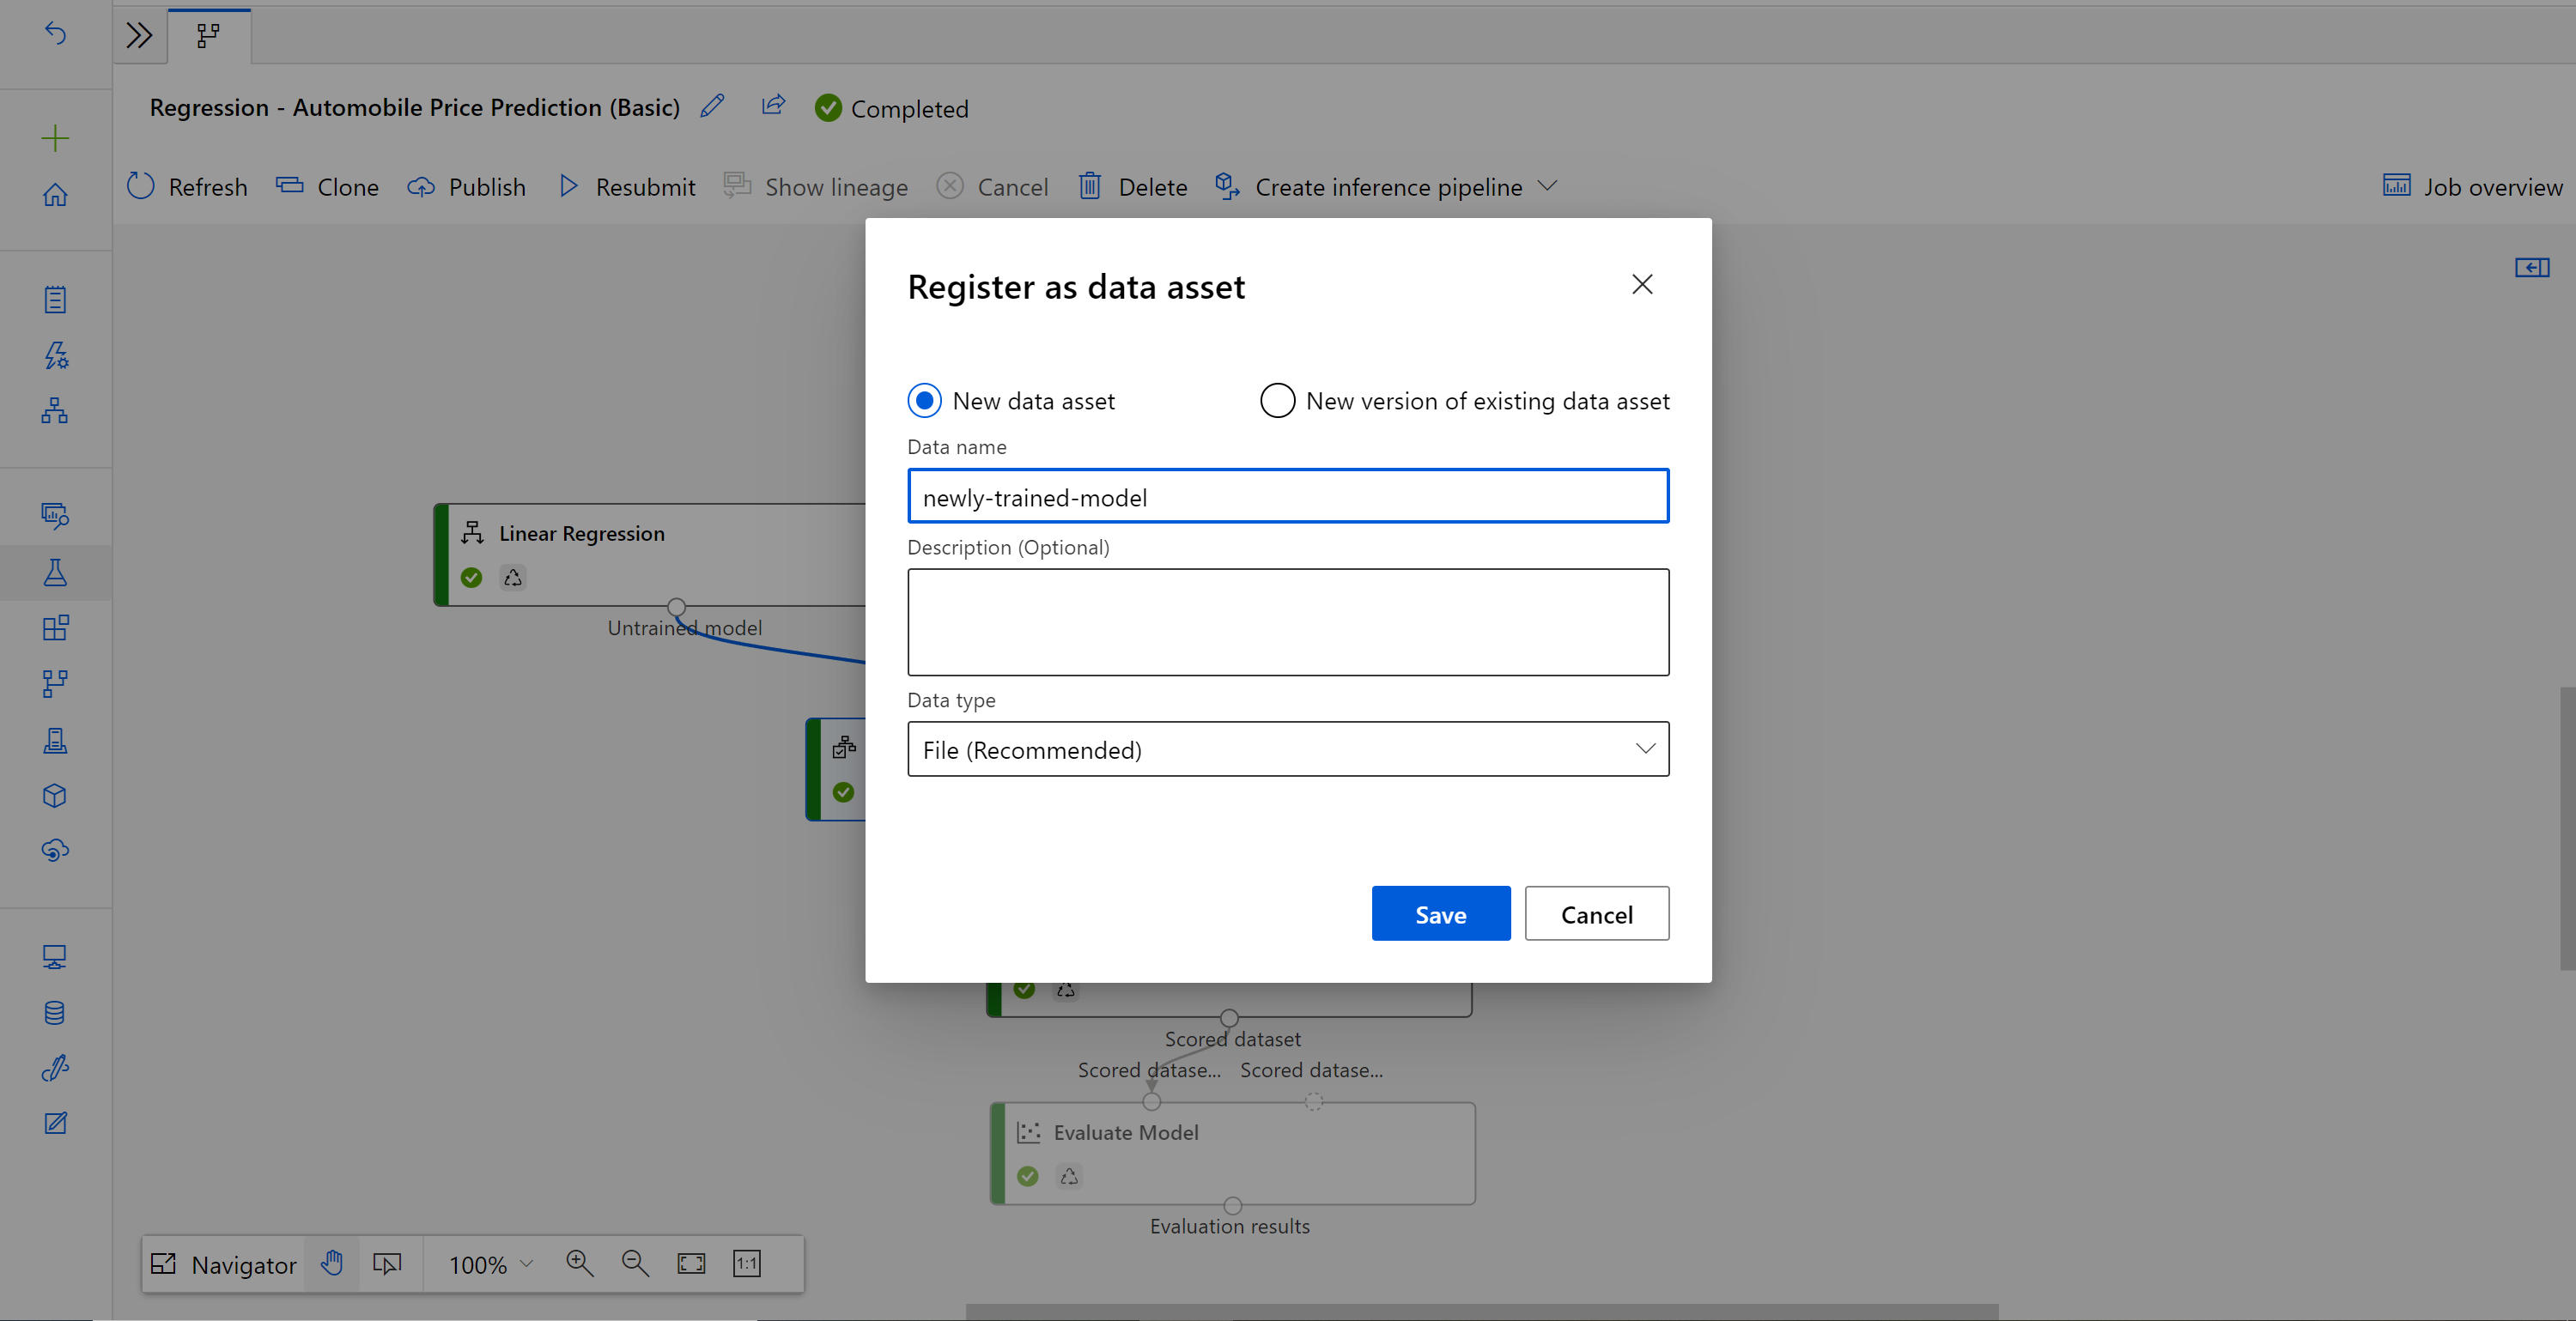 Screenshot of register as data asset with new data asset selected.